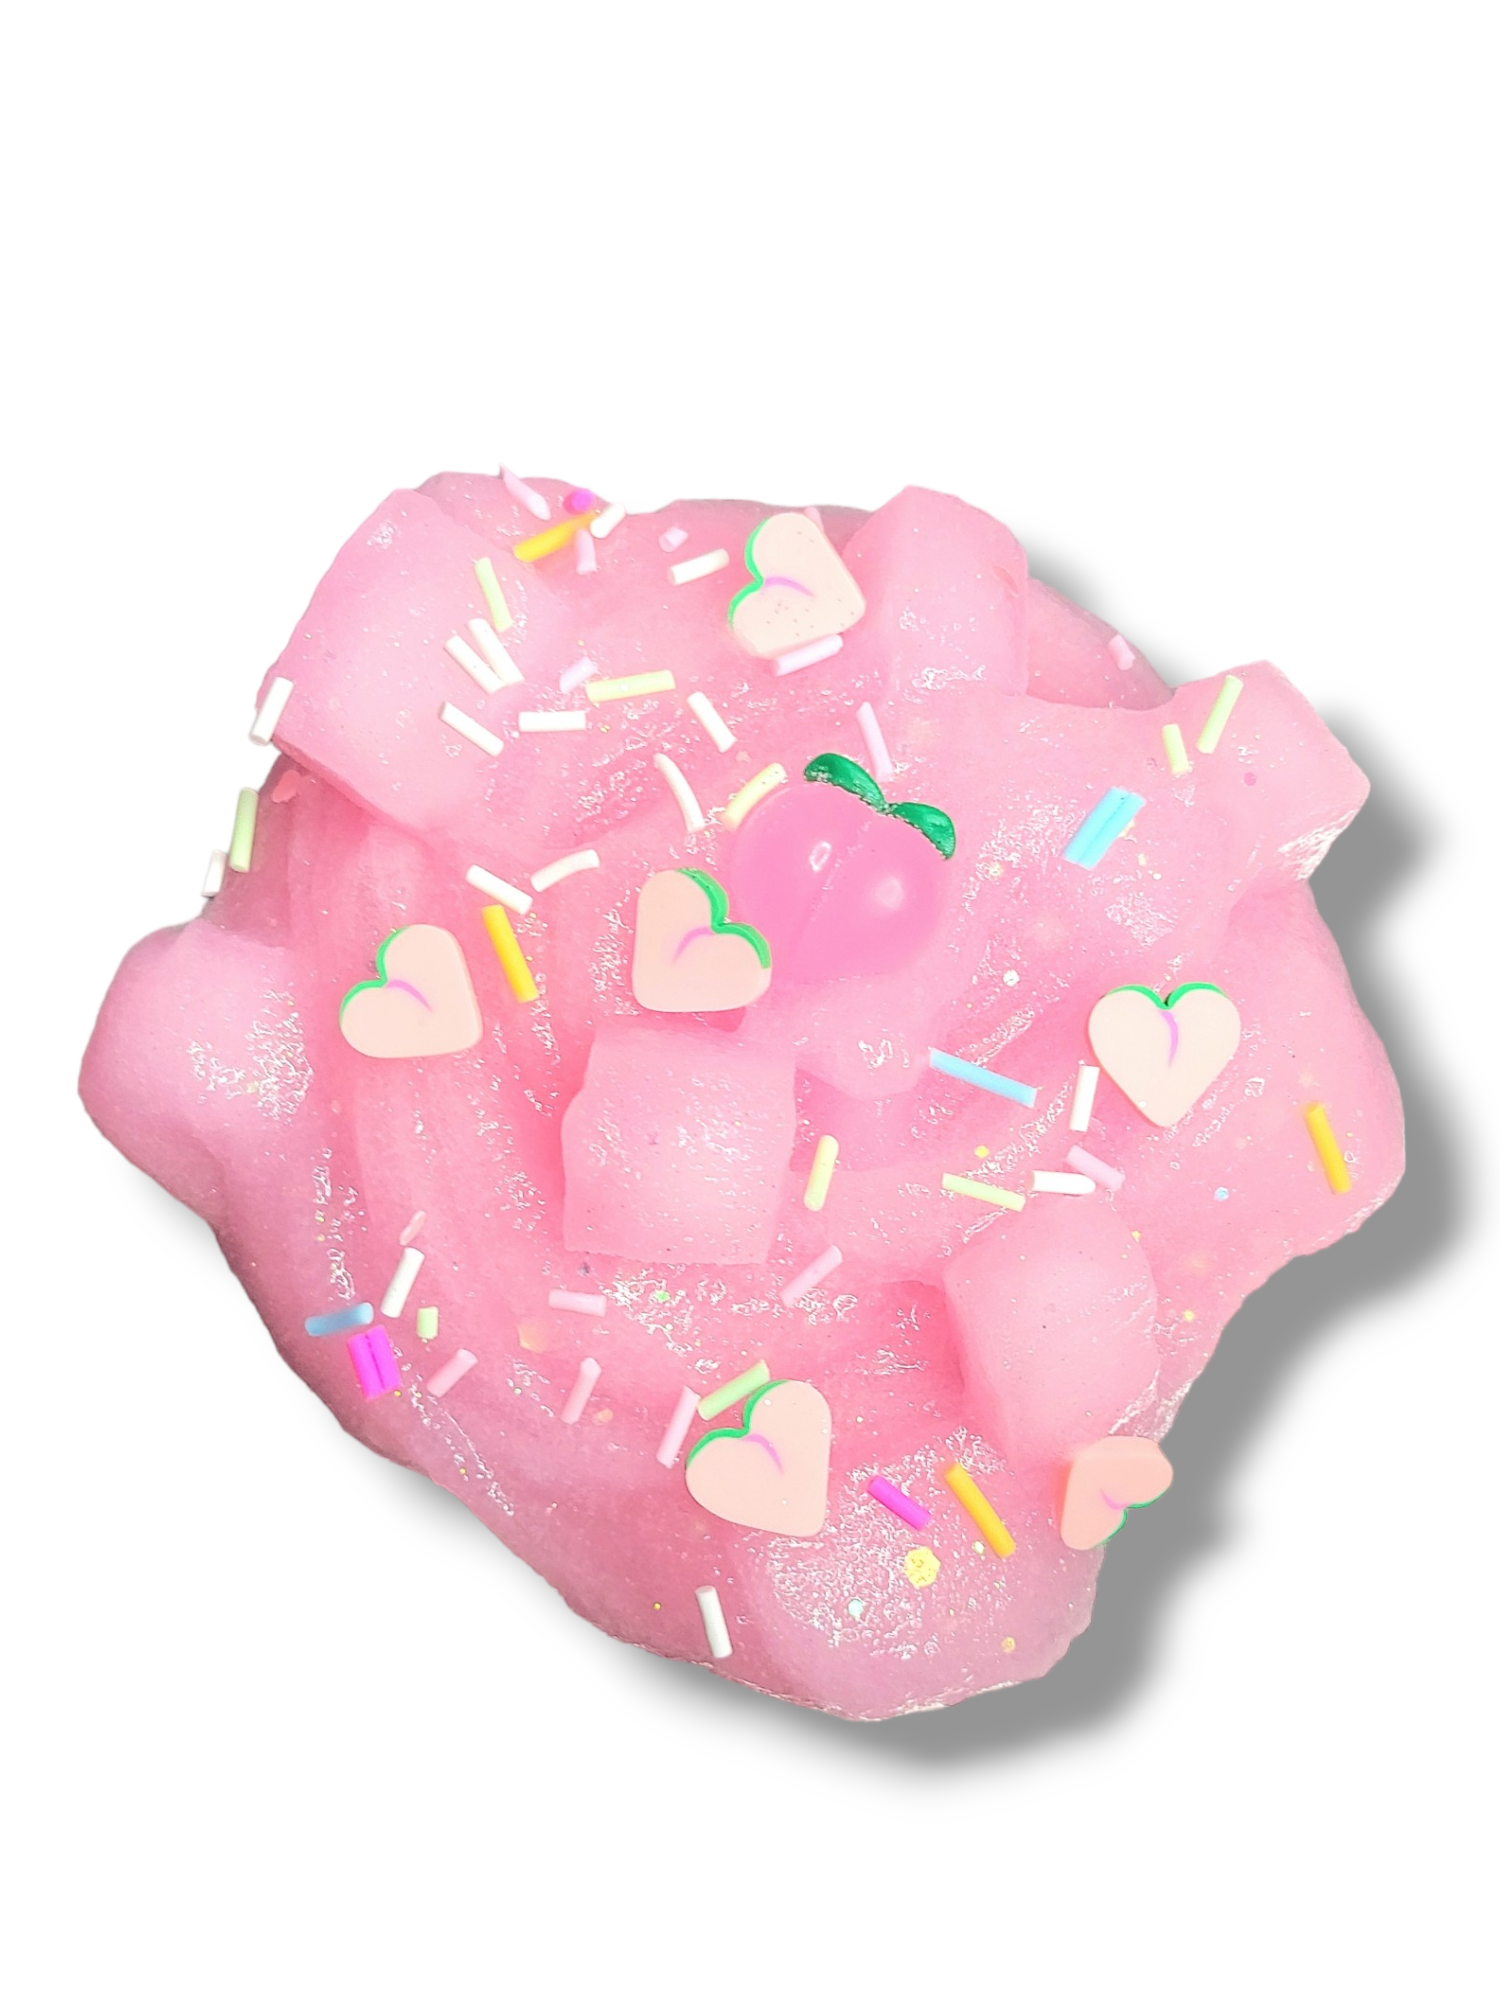 Kitty's Peach Jelly Cube Handmade Slime Slime by Hoshimi Slimes LLC | Hoshimi Slimes LLC